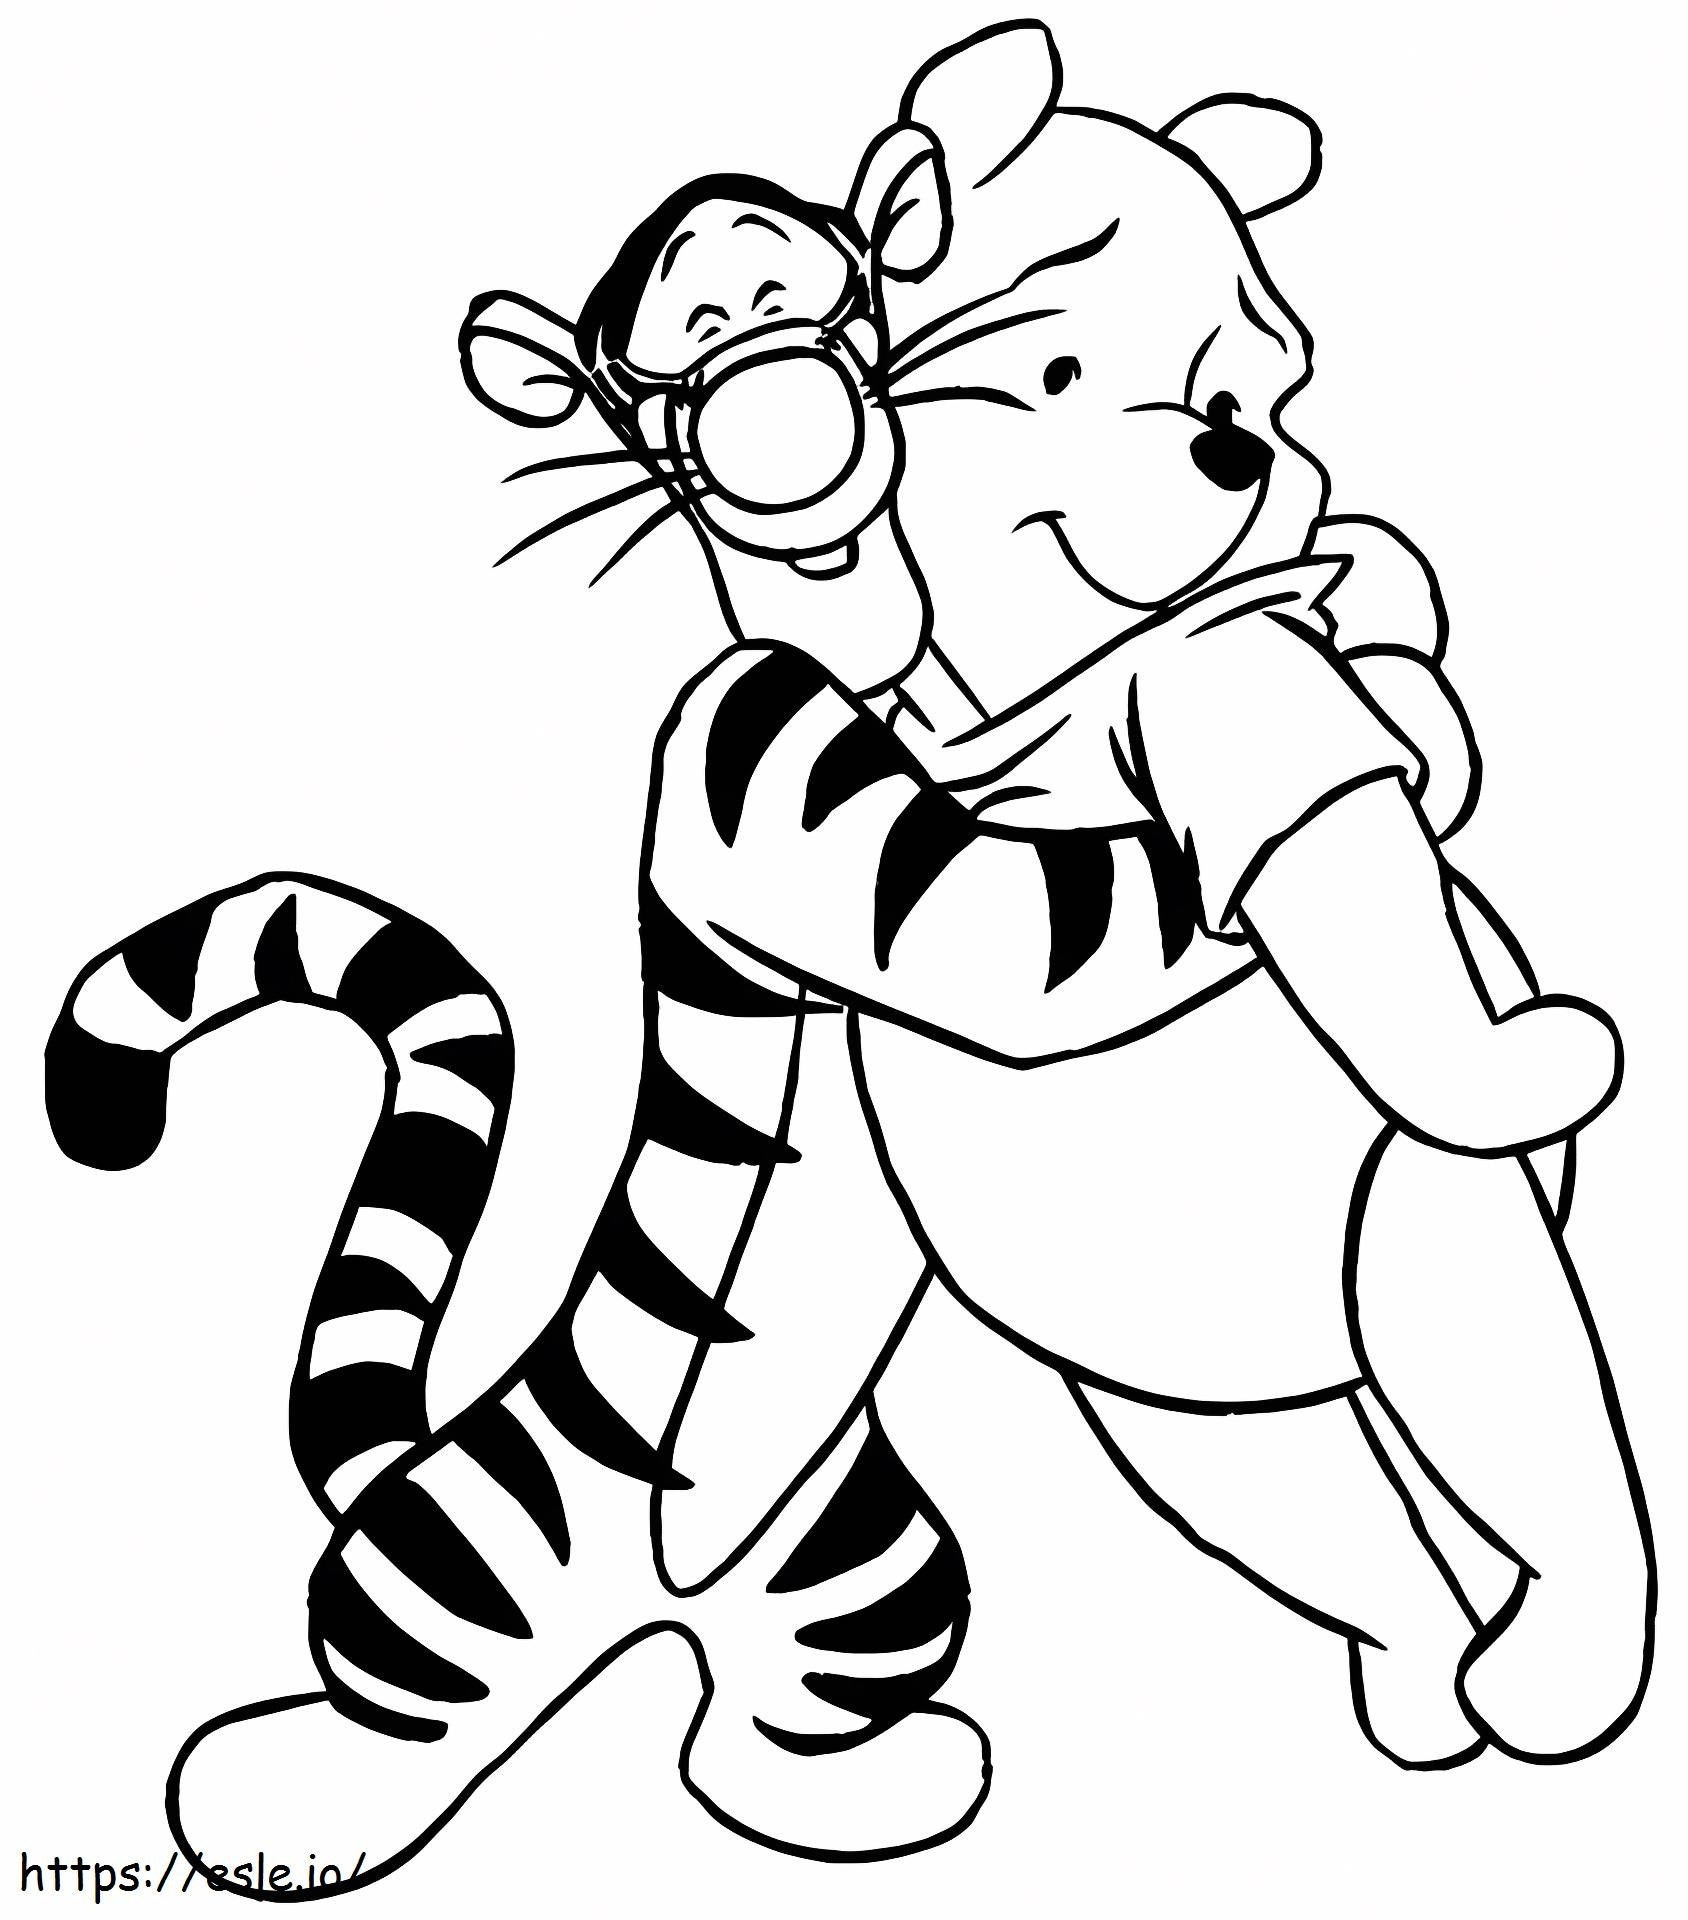 1532919356 Tigger Hugging Pooh A4 coloring page